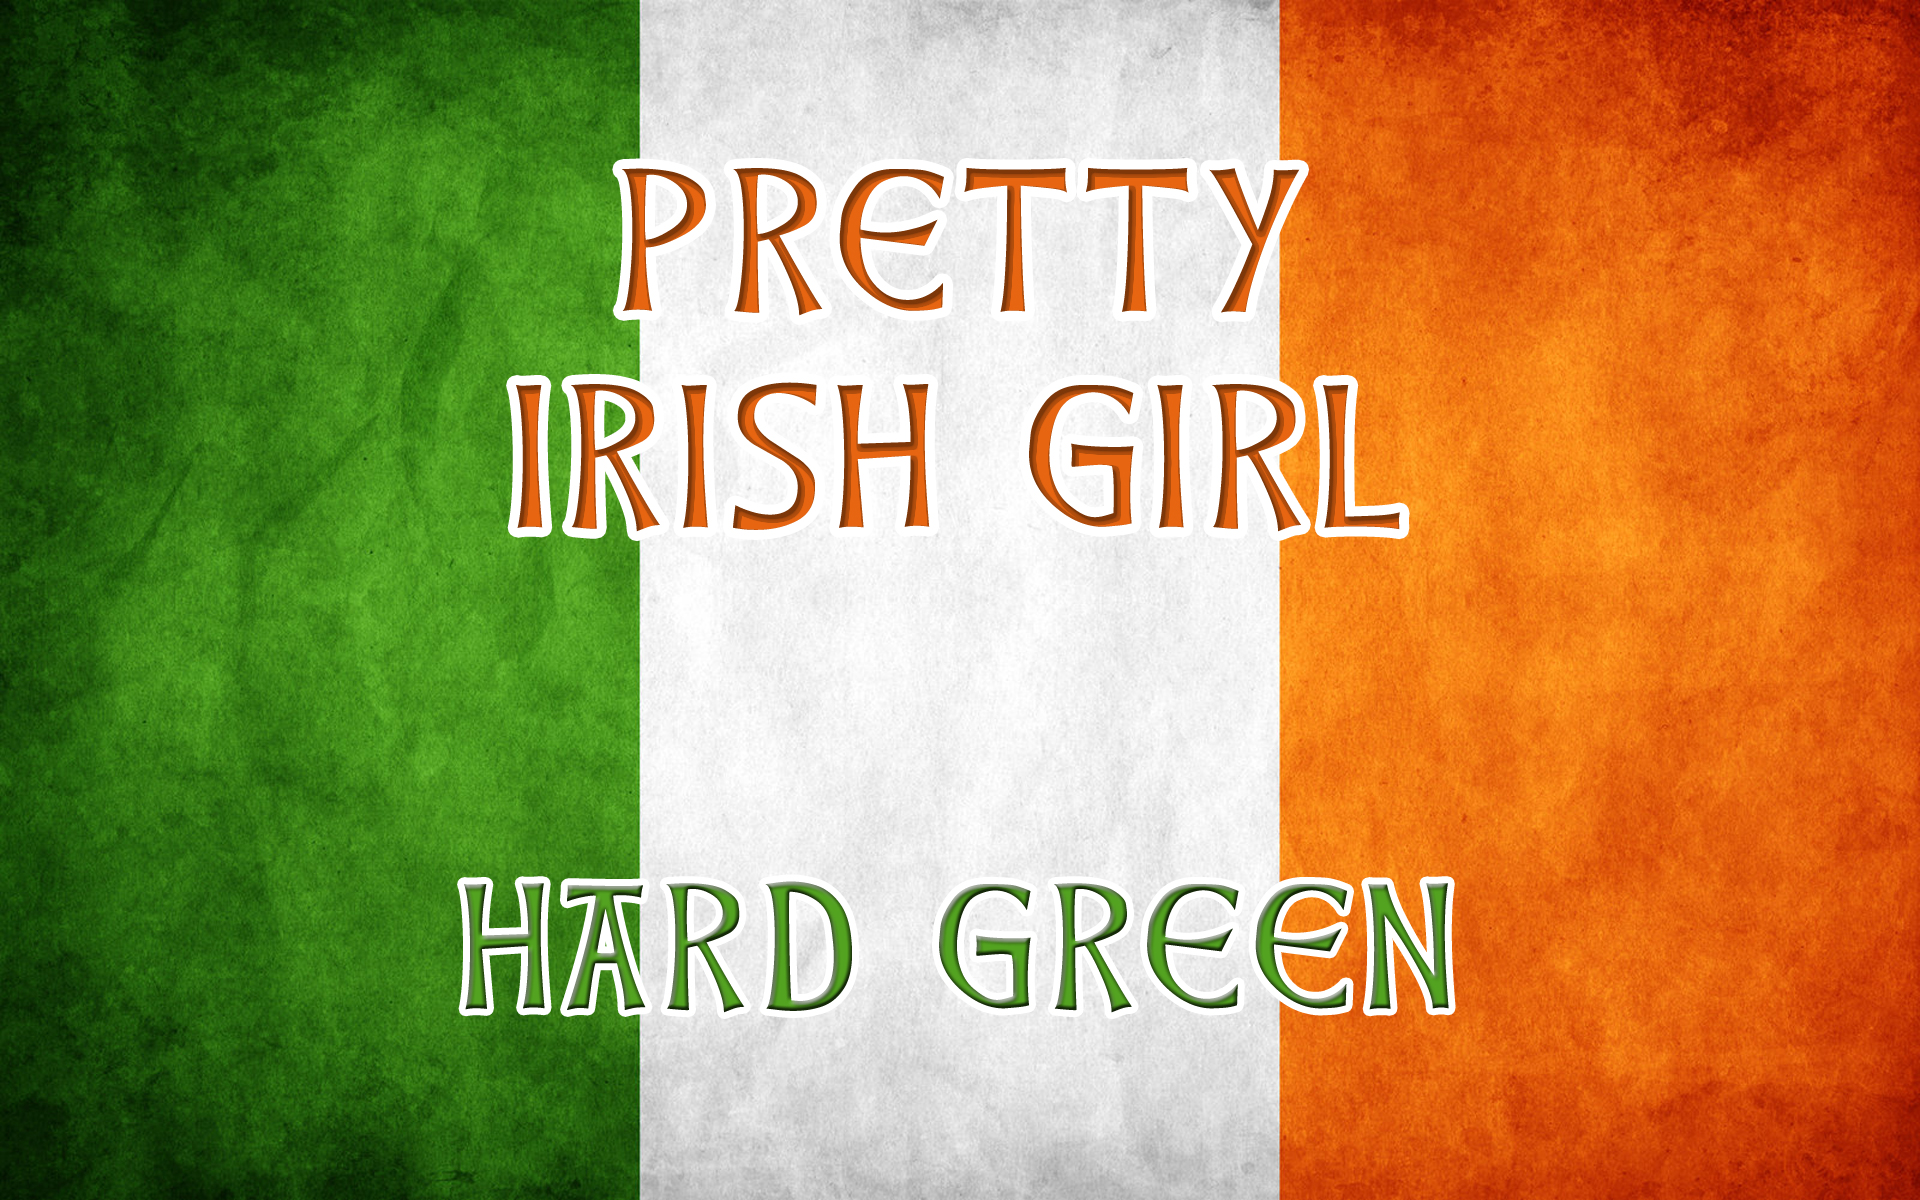 Pretty Irish Girl - Irish drinking songs - Hard Green